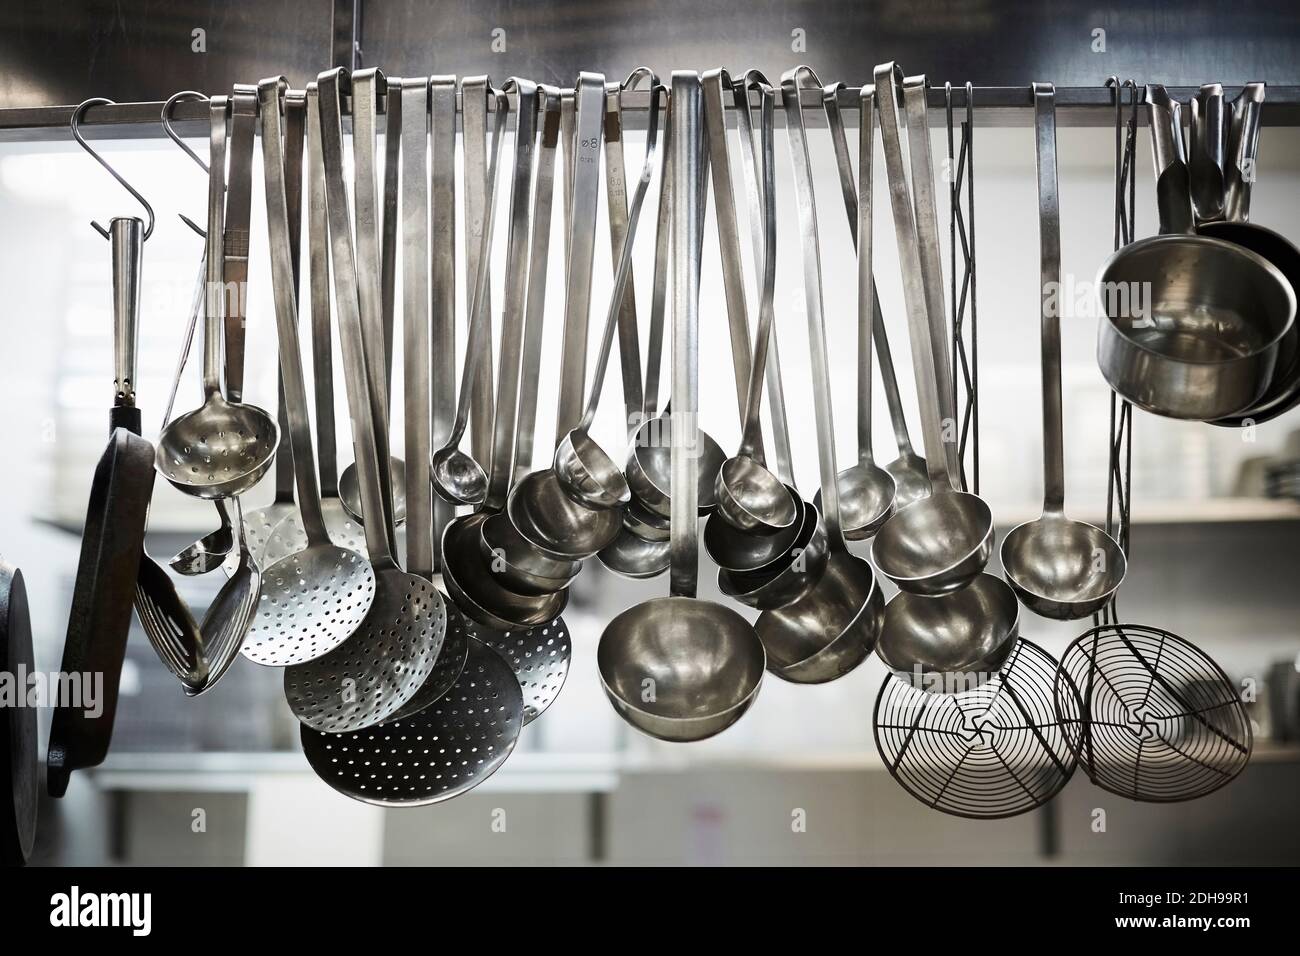 Utensils on metal rack in commercial kitchen Stock Photo